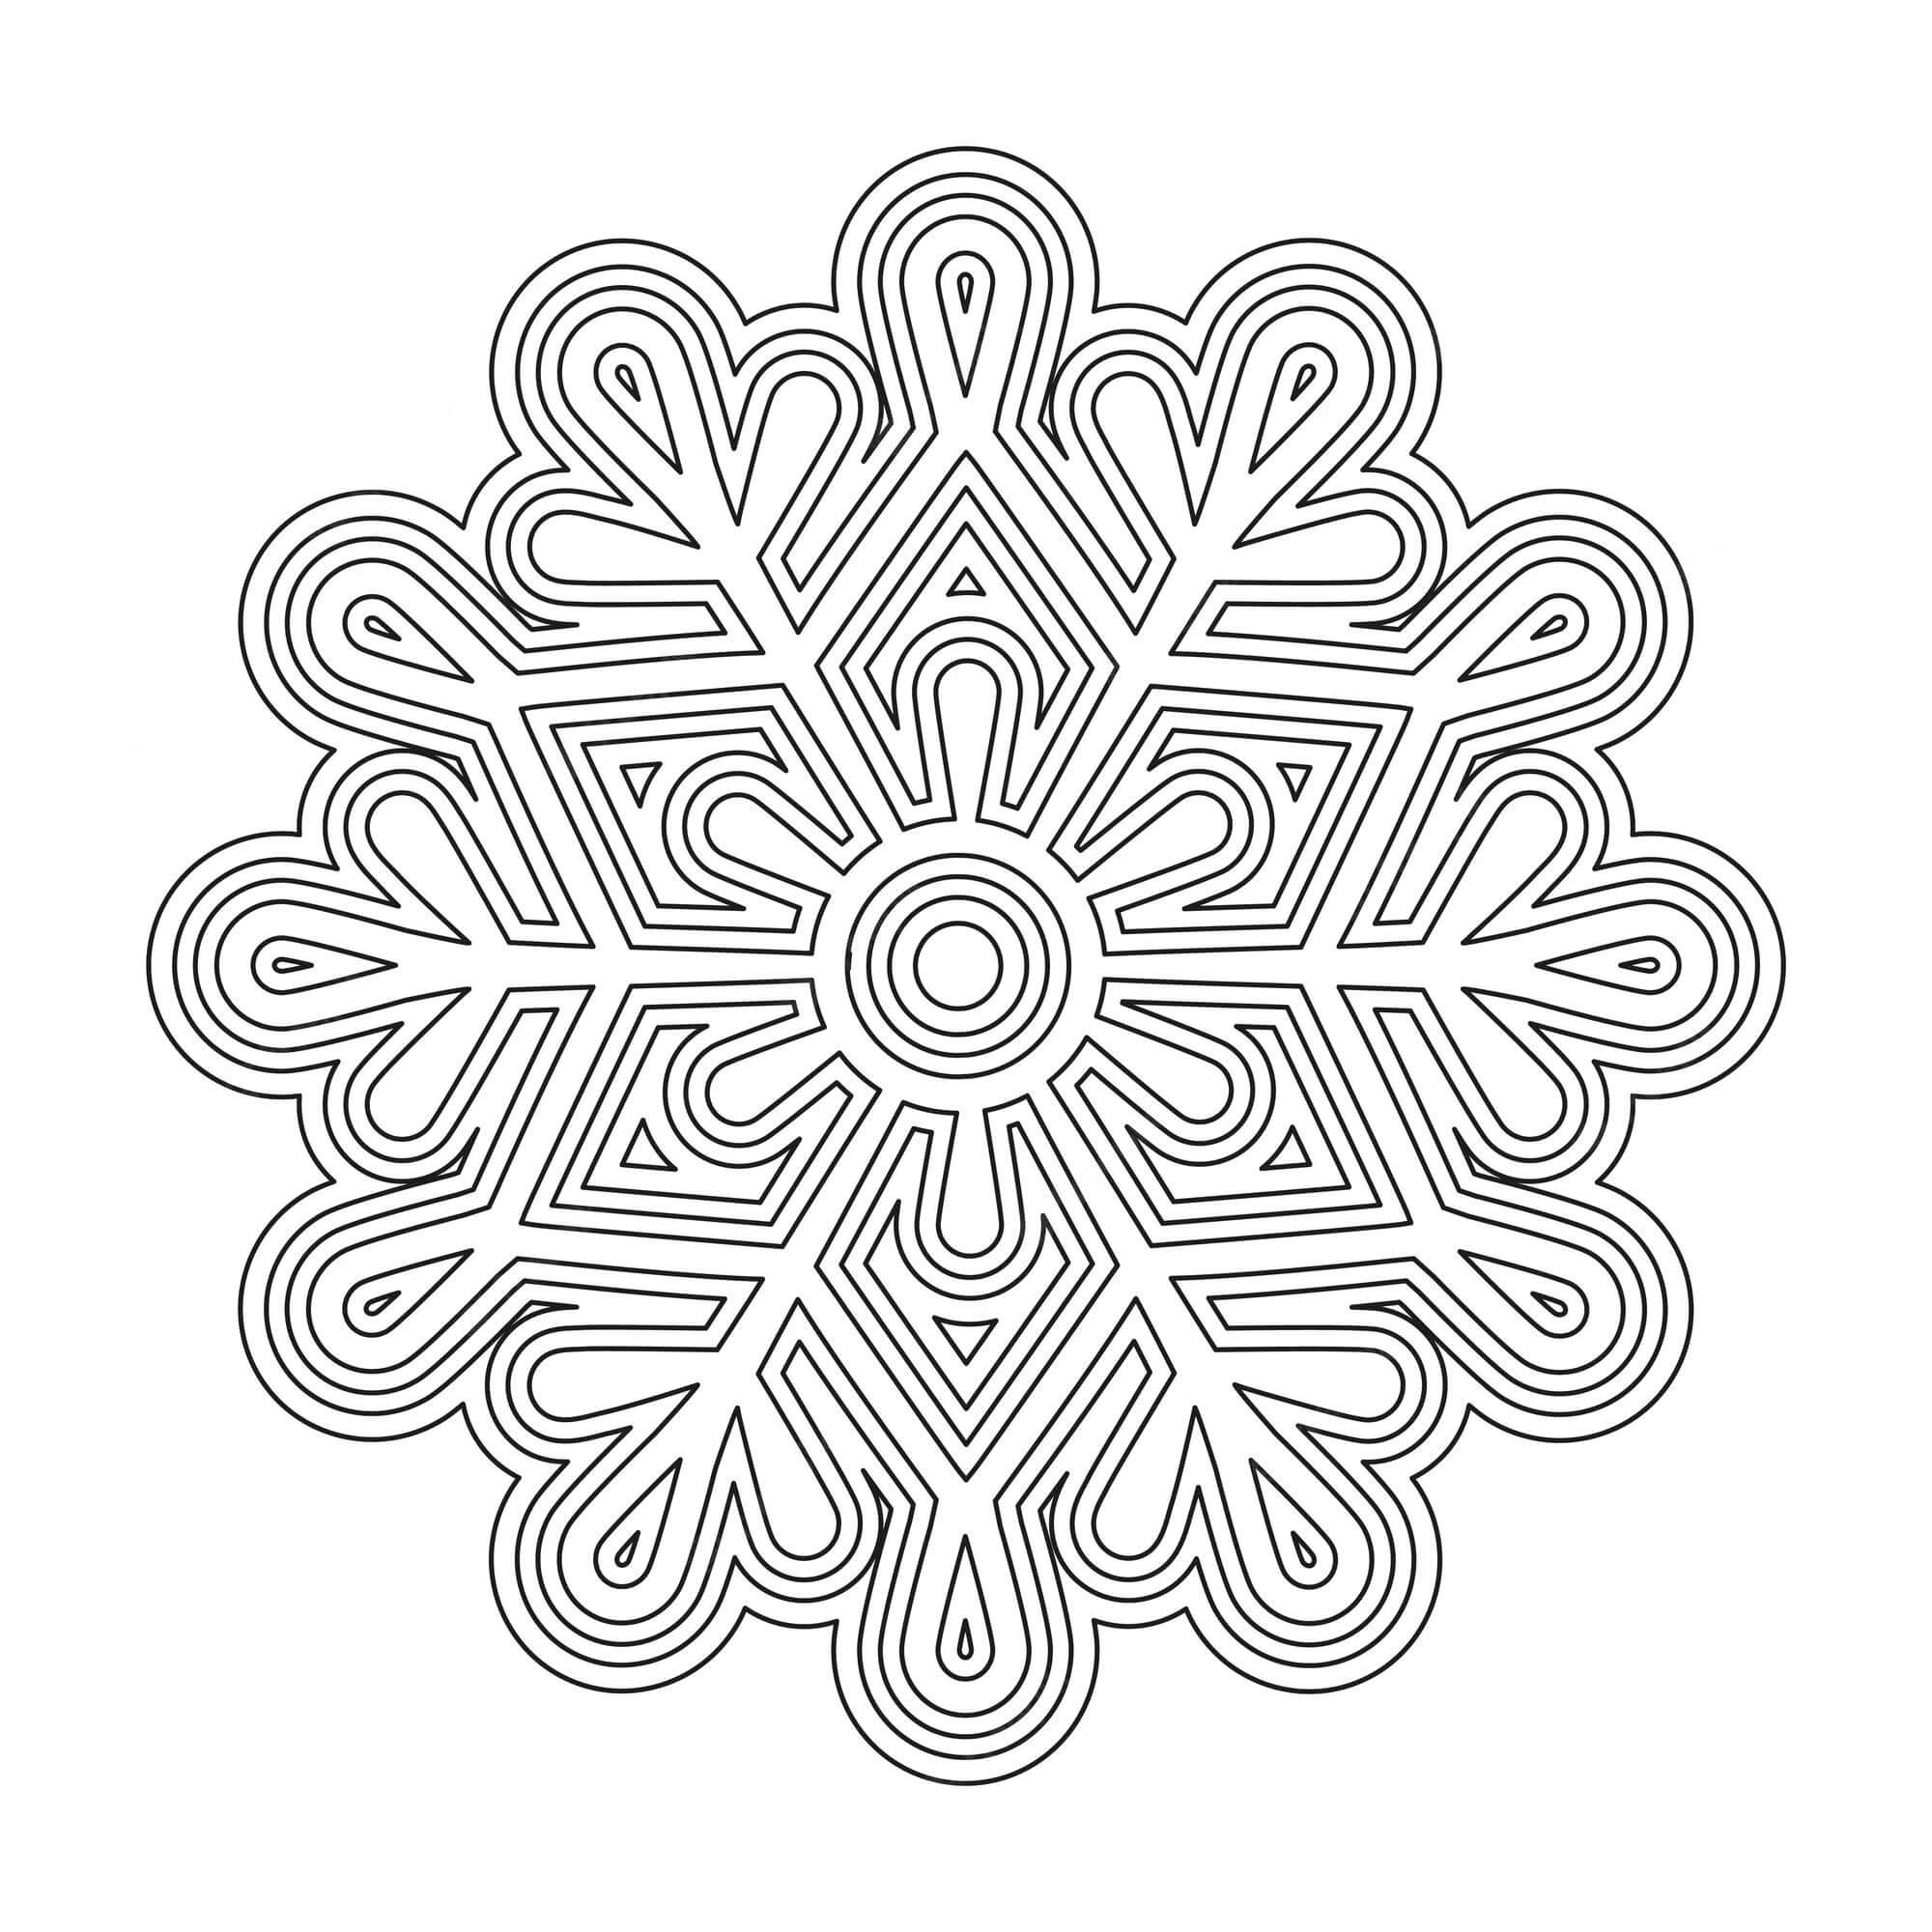 Mandala Winter Coloring Page – Sheet 8 Mandala